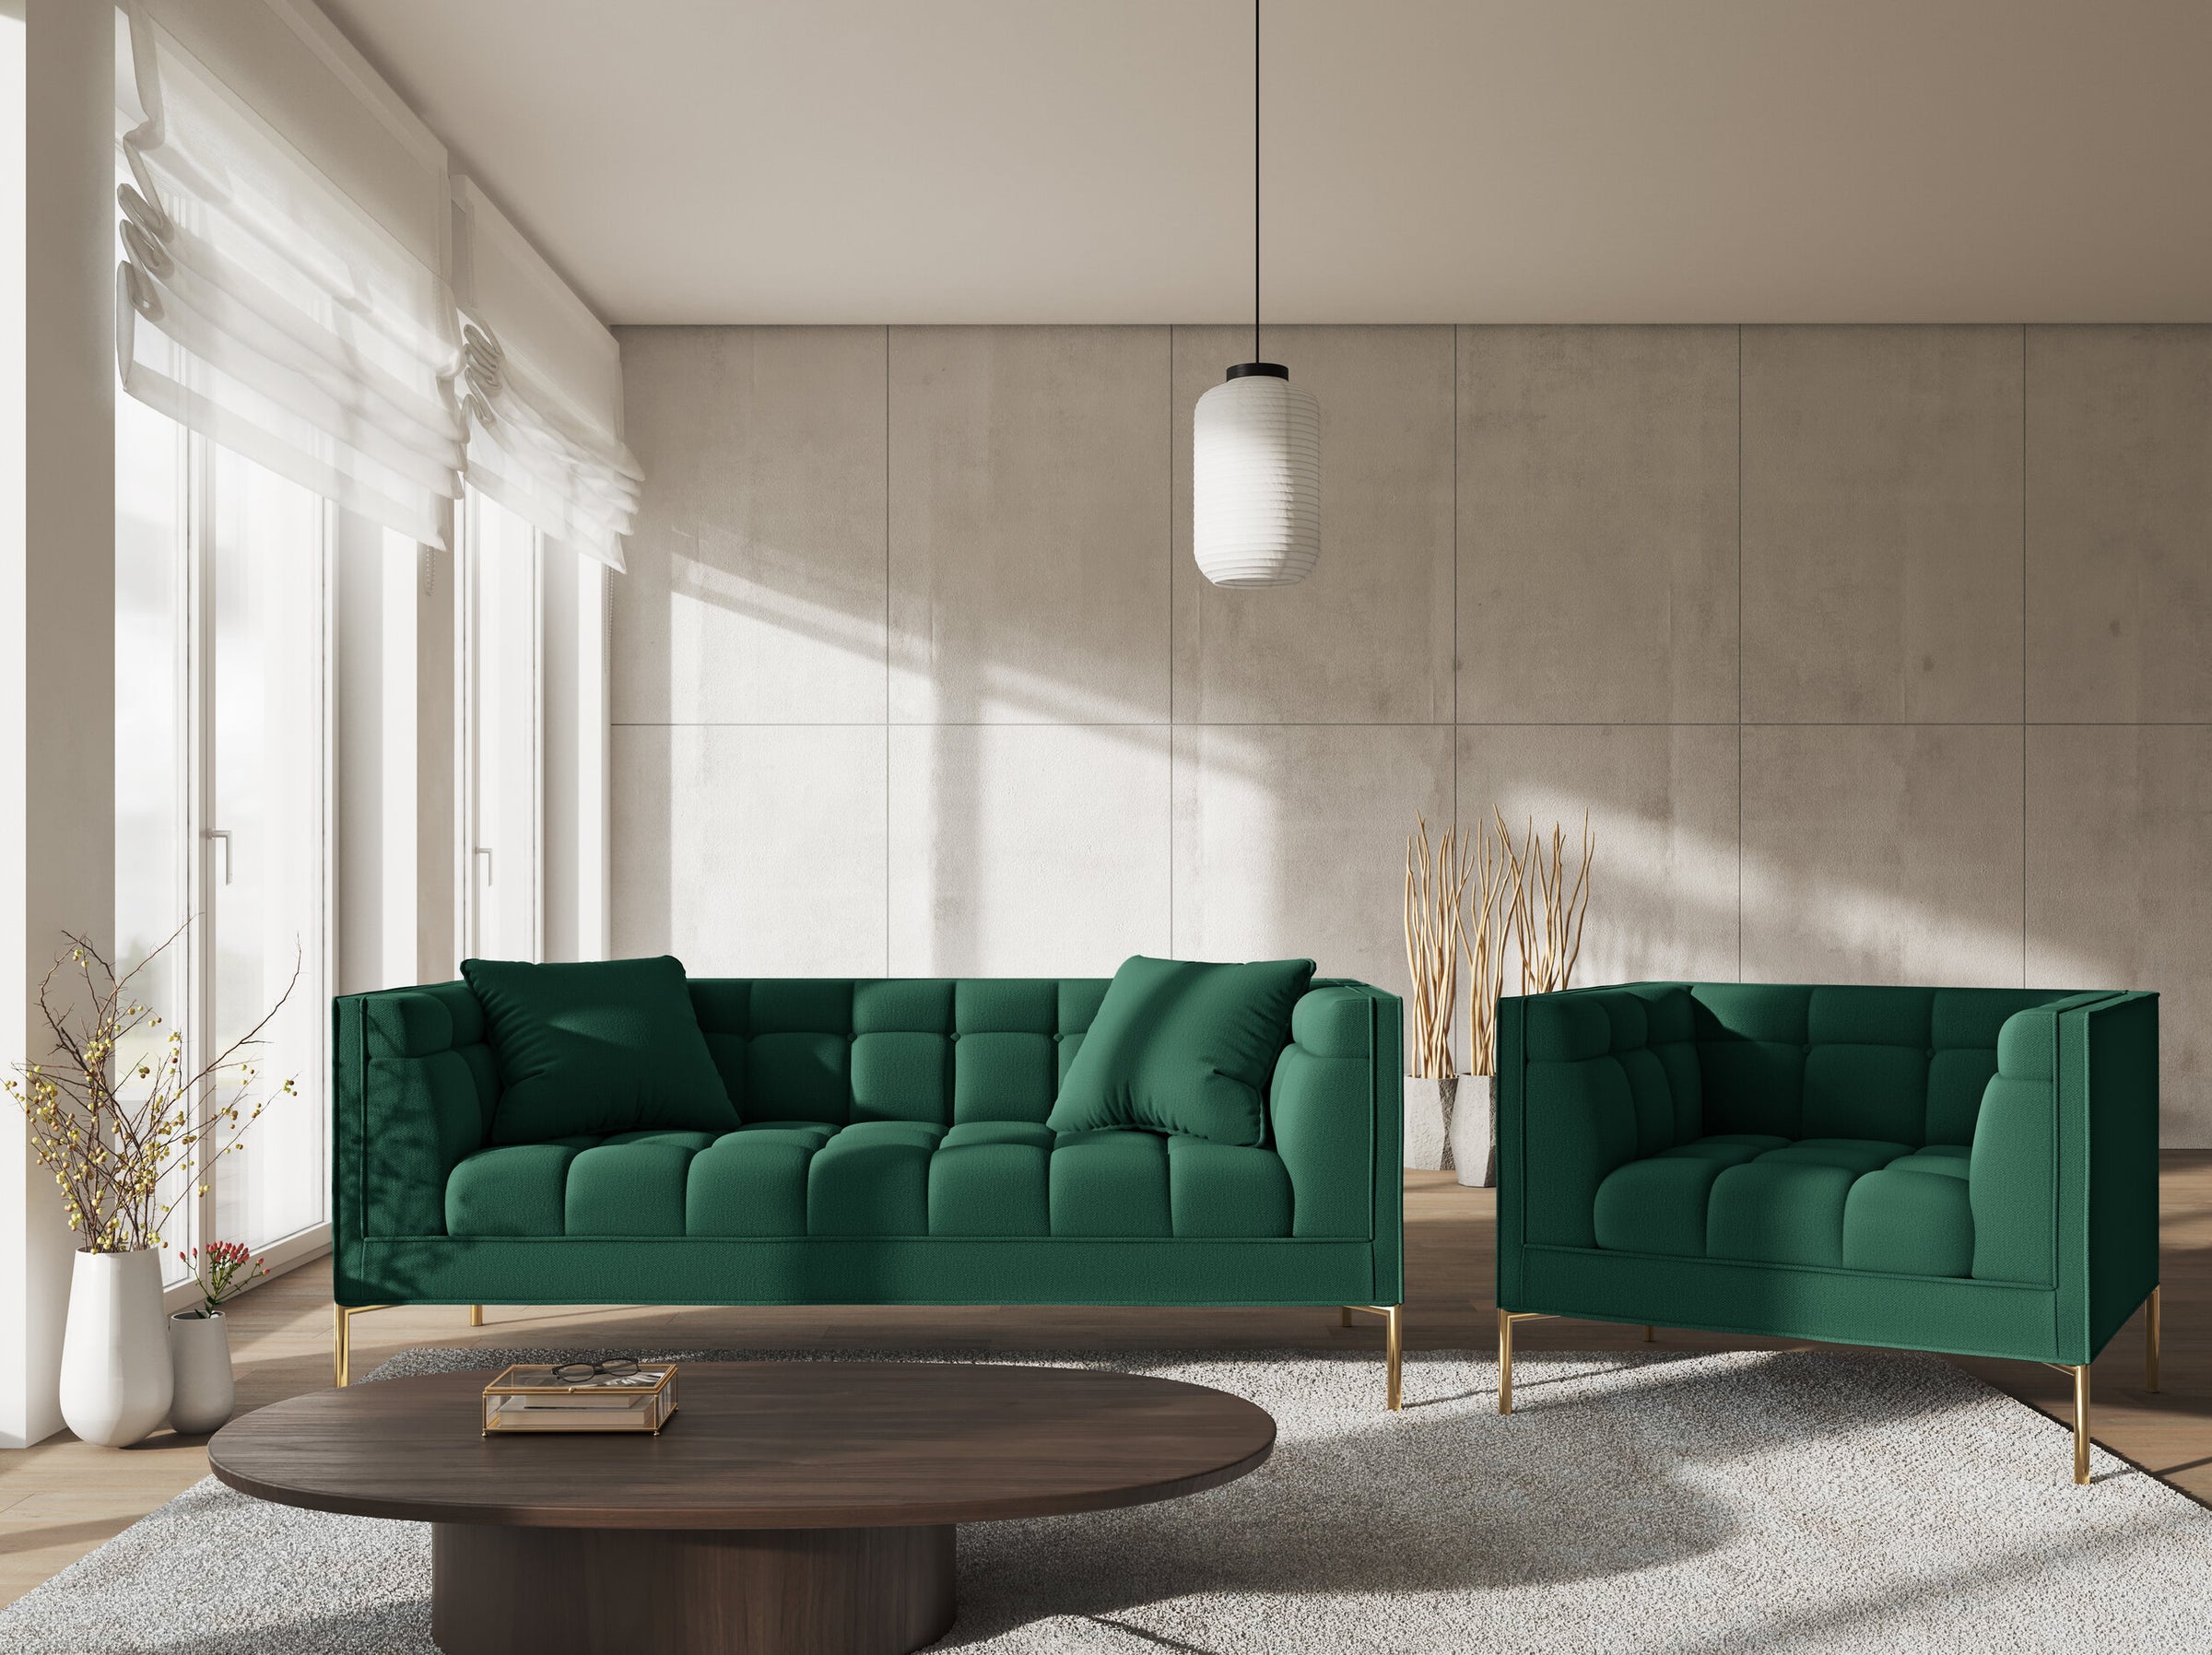 Karoo sofas strukturierter stoff grün